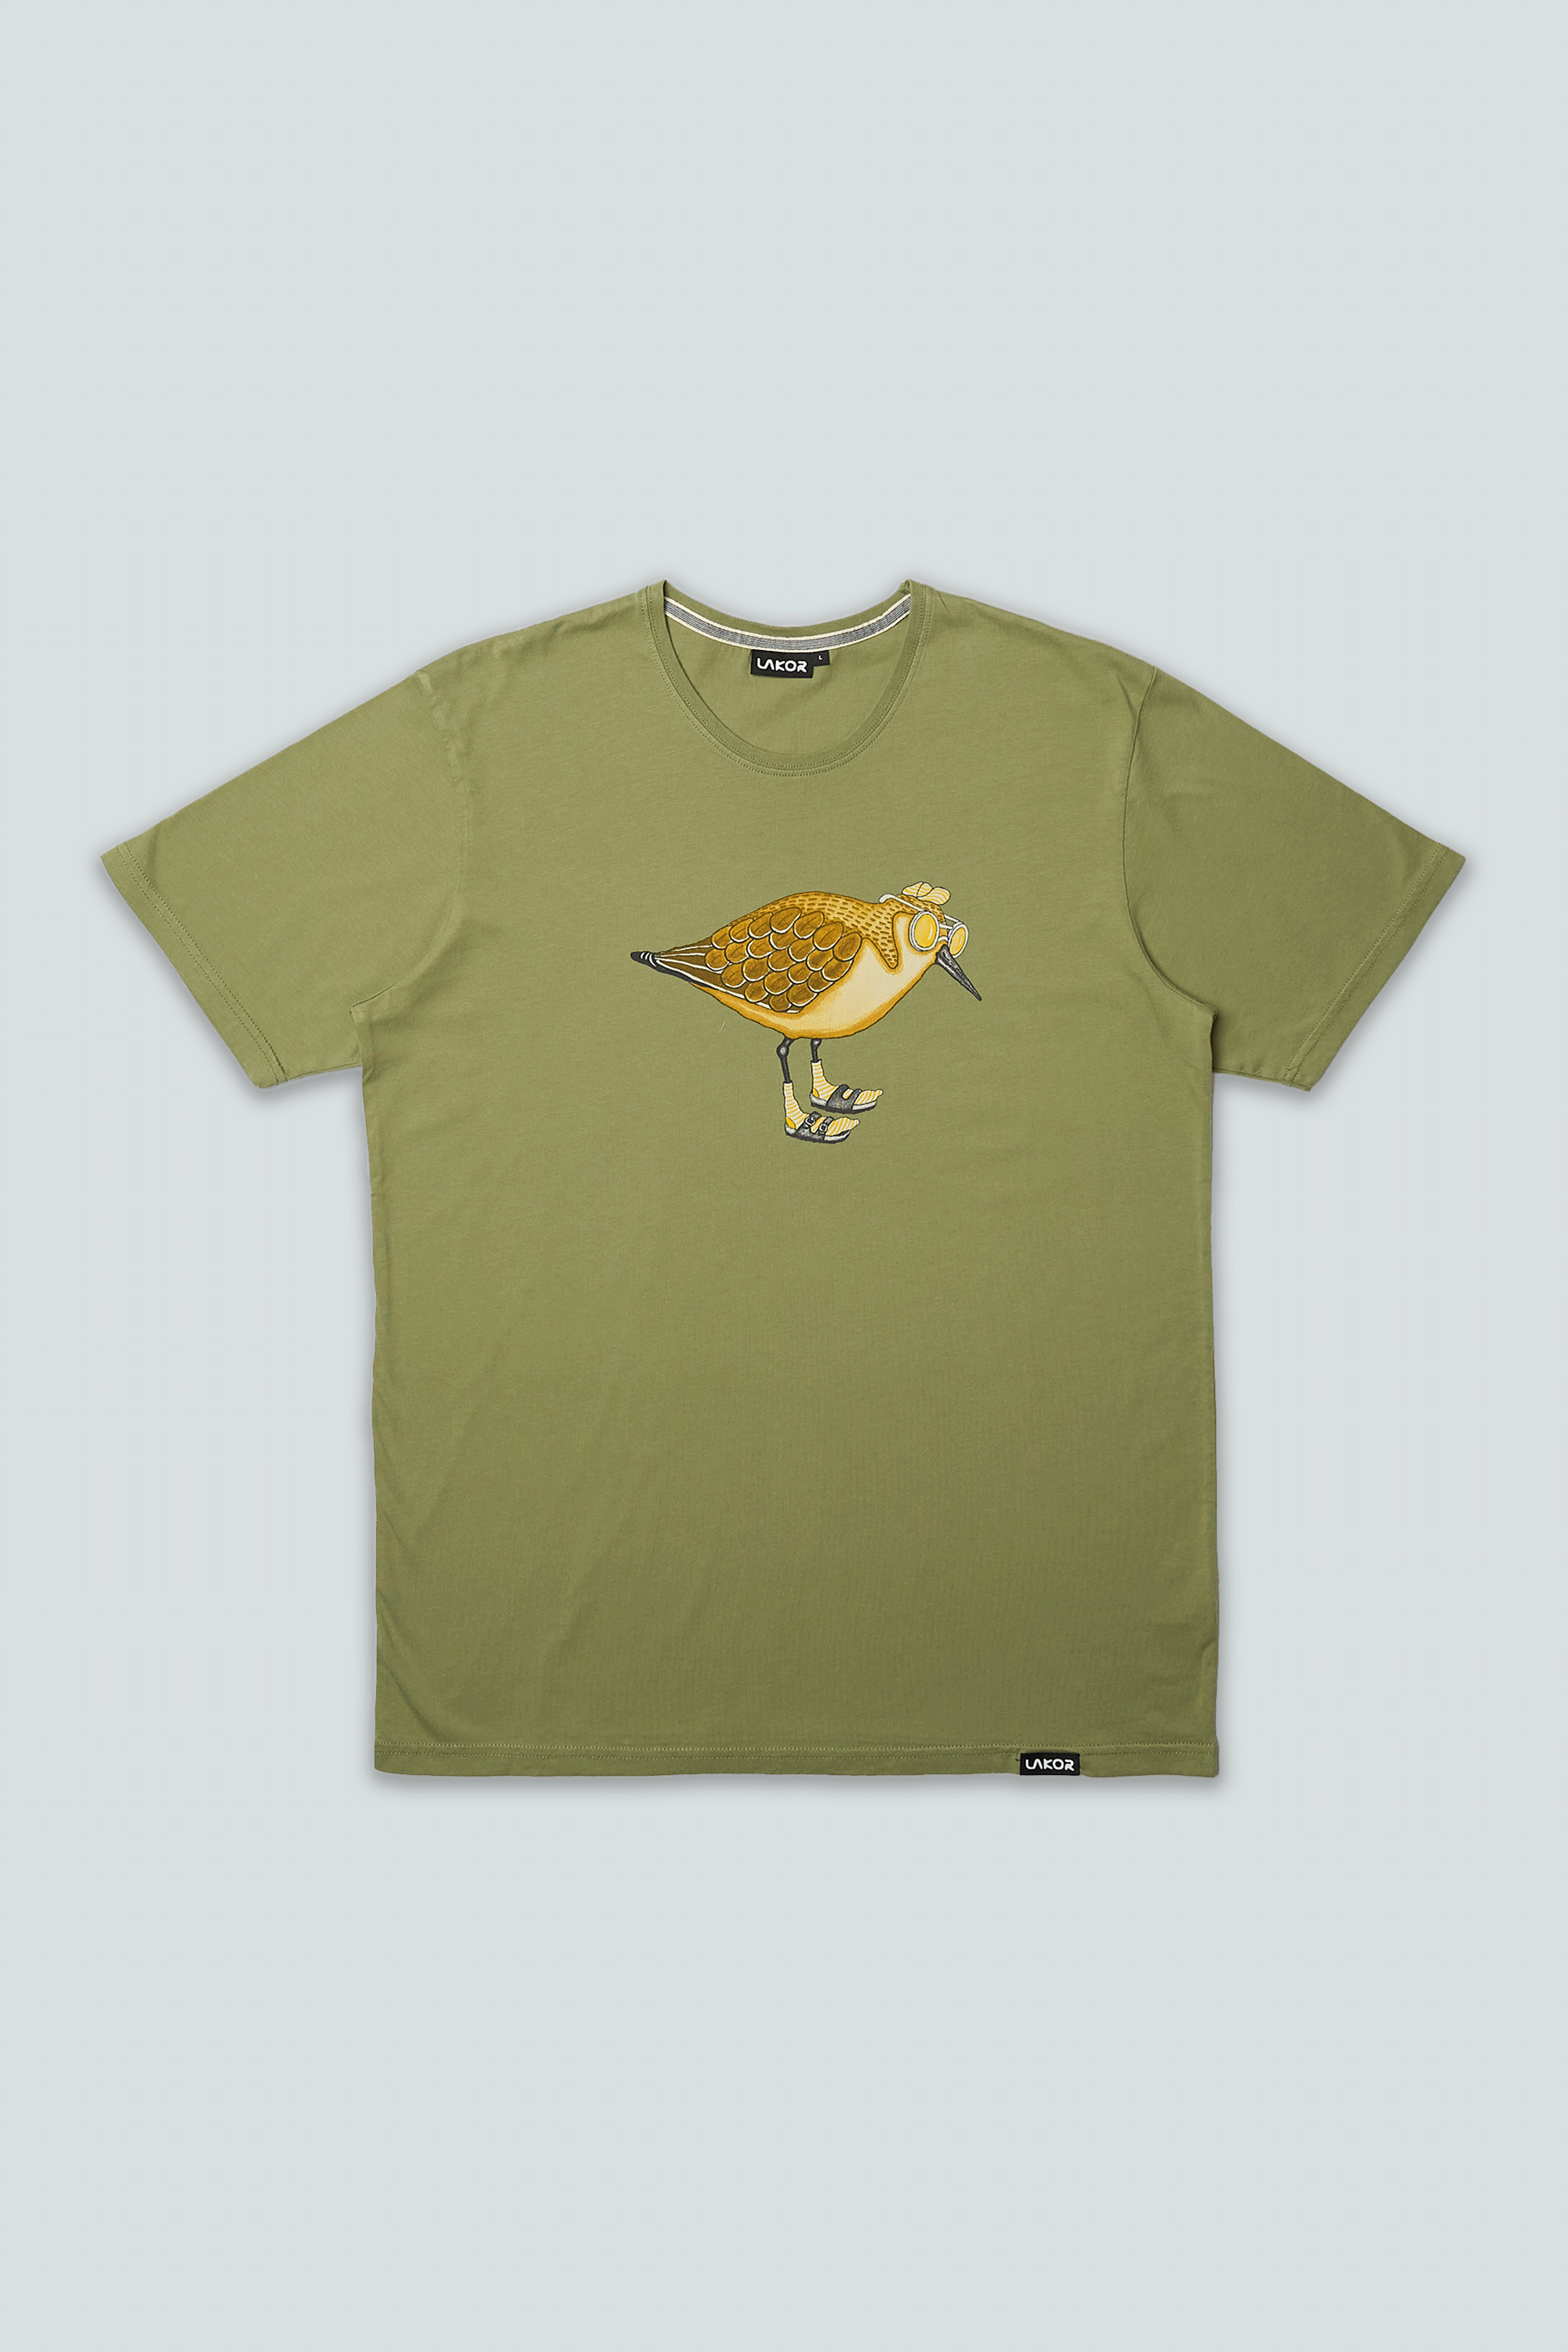 Sandpiper Sunshine T-shirt (Oil Green)